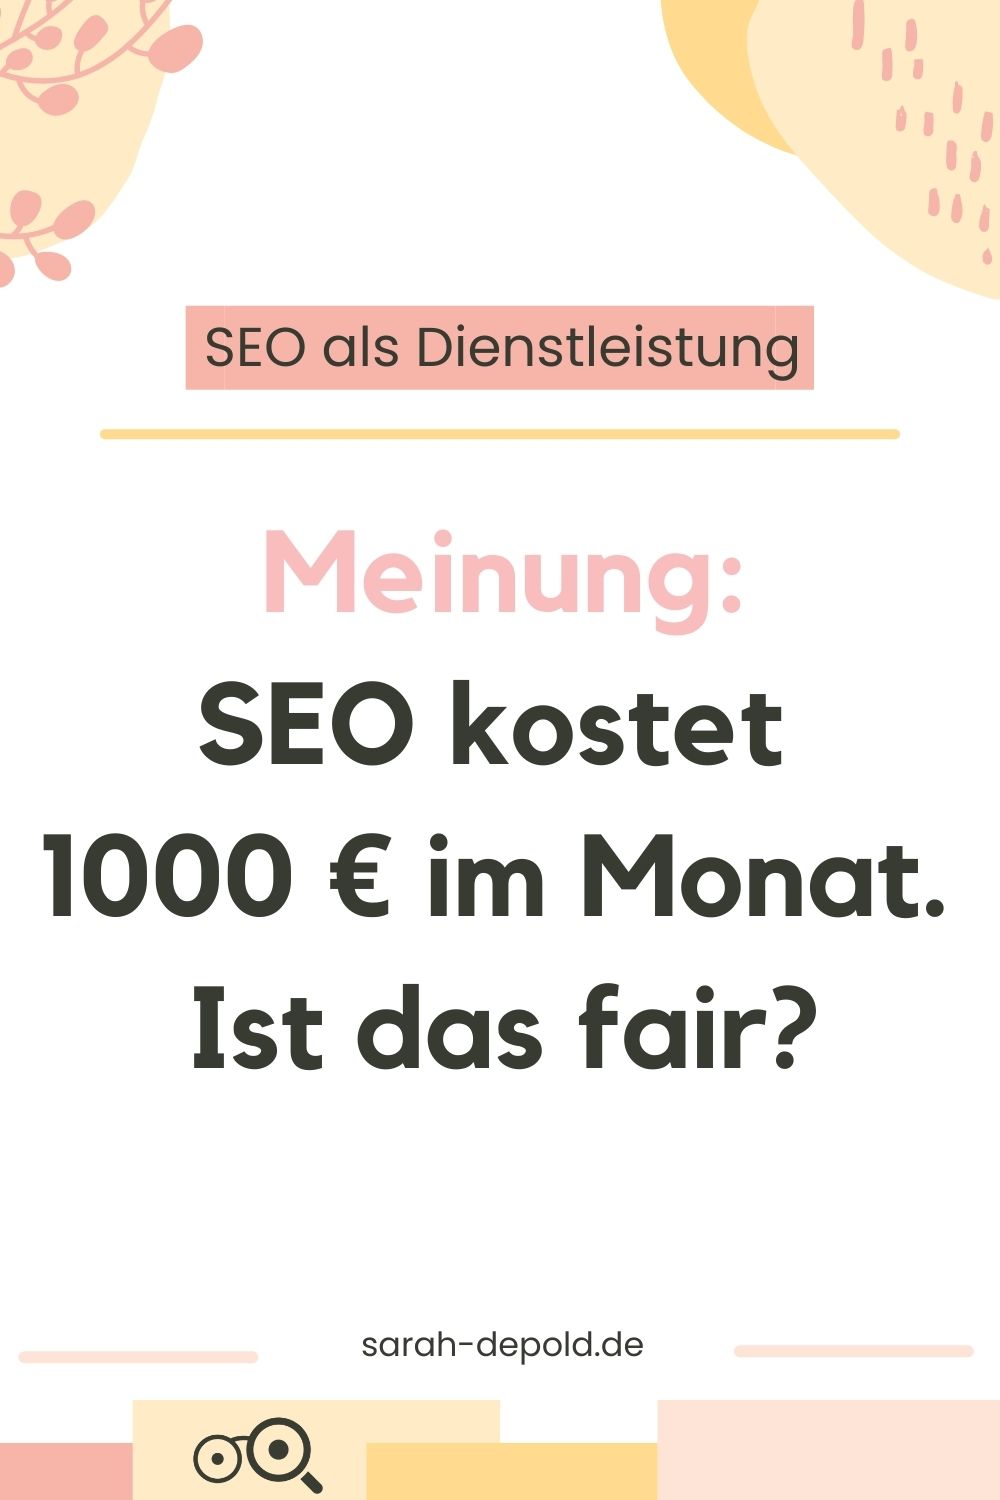 SEO kostet 1000 € im Monat - ist das fair? - sarah-depold.de